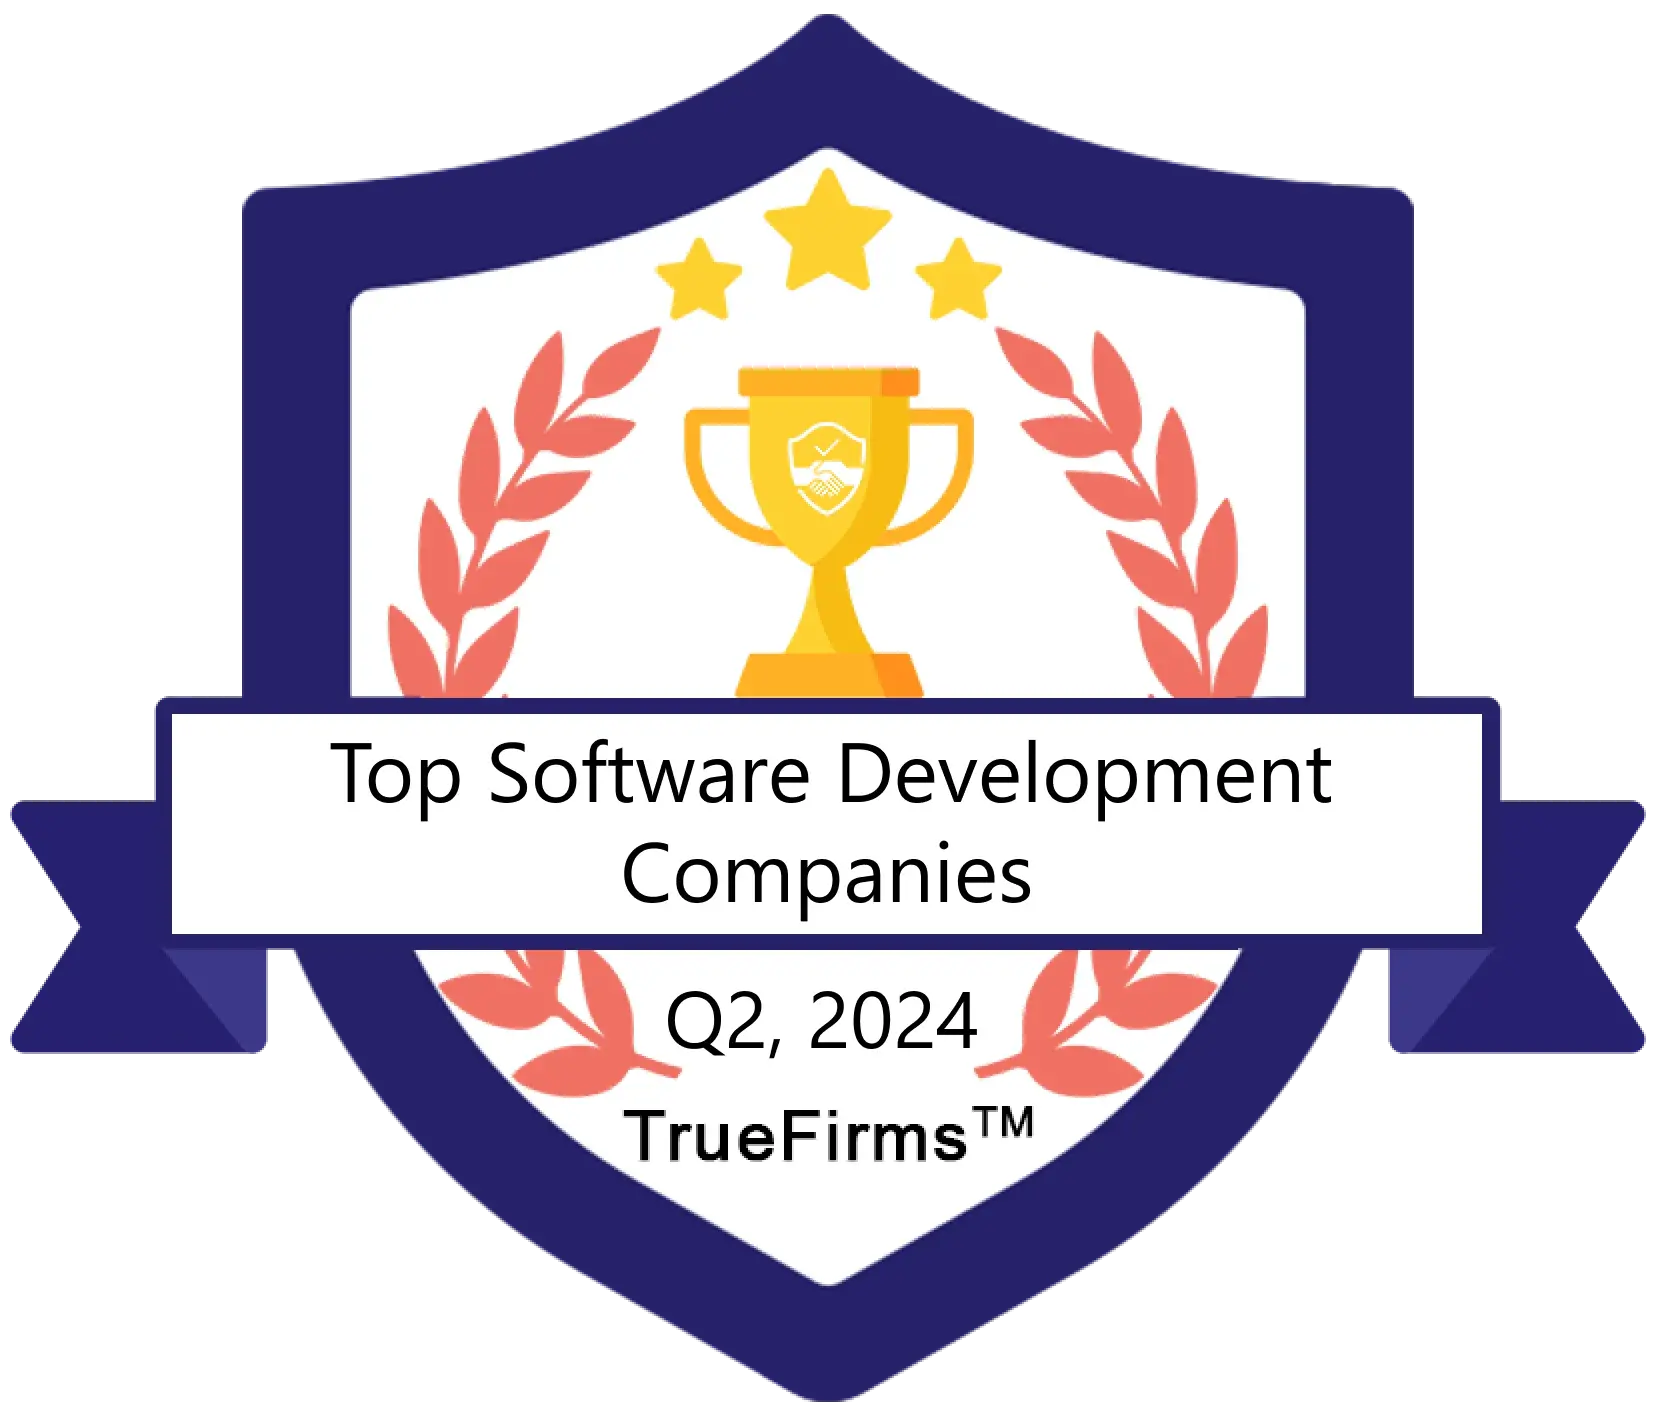 Top Software Development Company 2024 Award